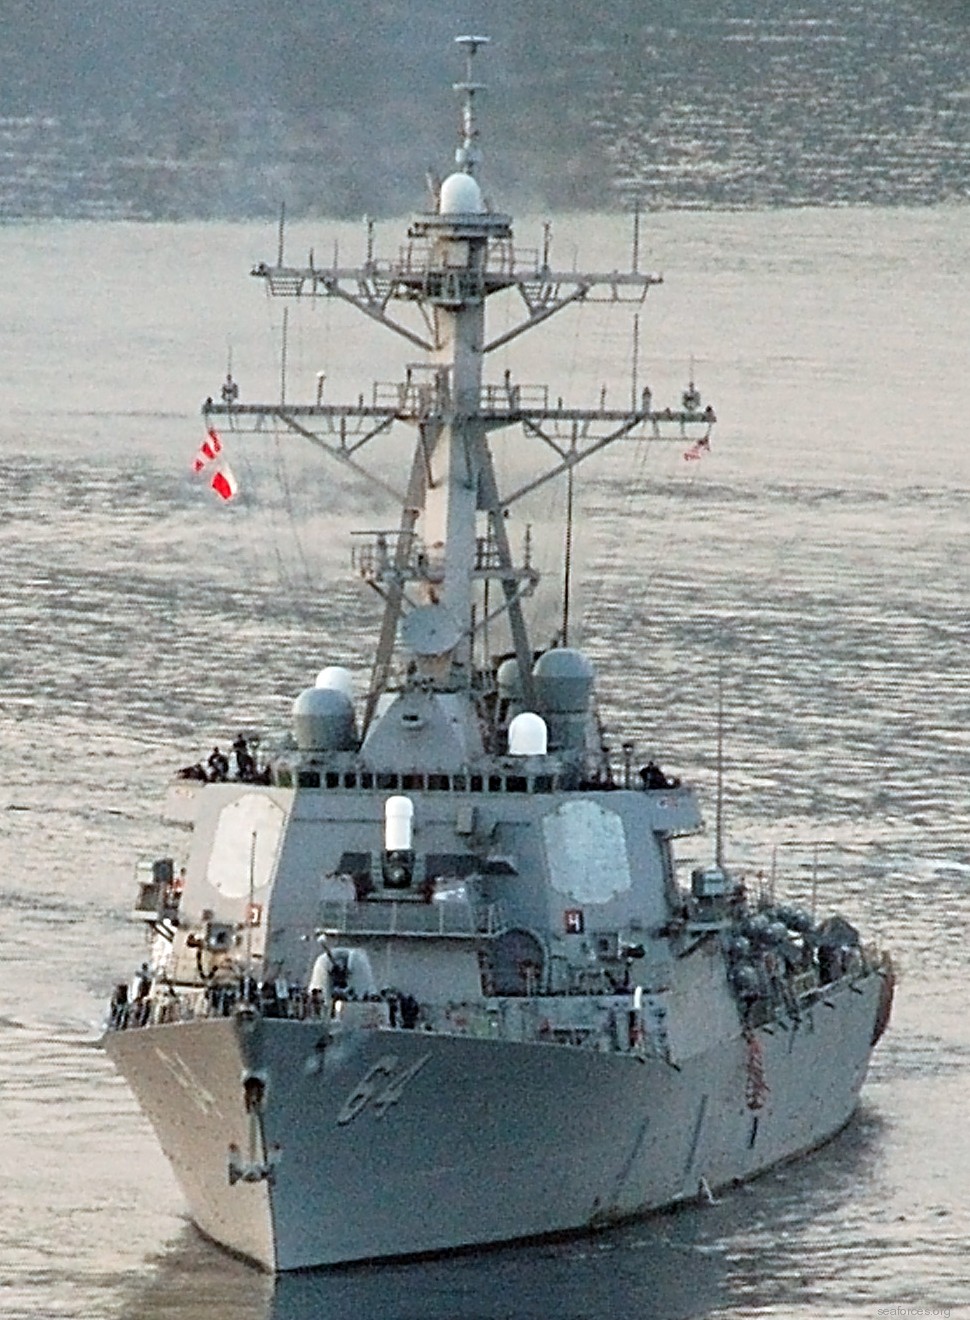 ddg-64 uss carney destroyer arleigh burke class navy 60